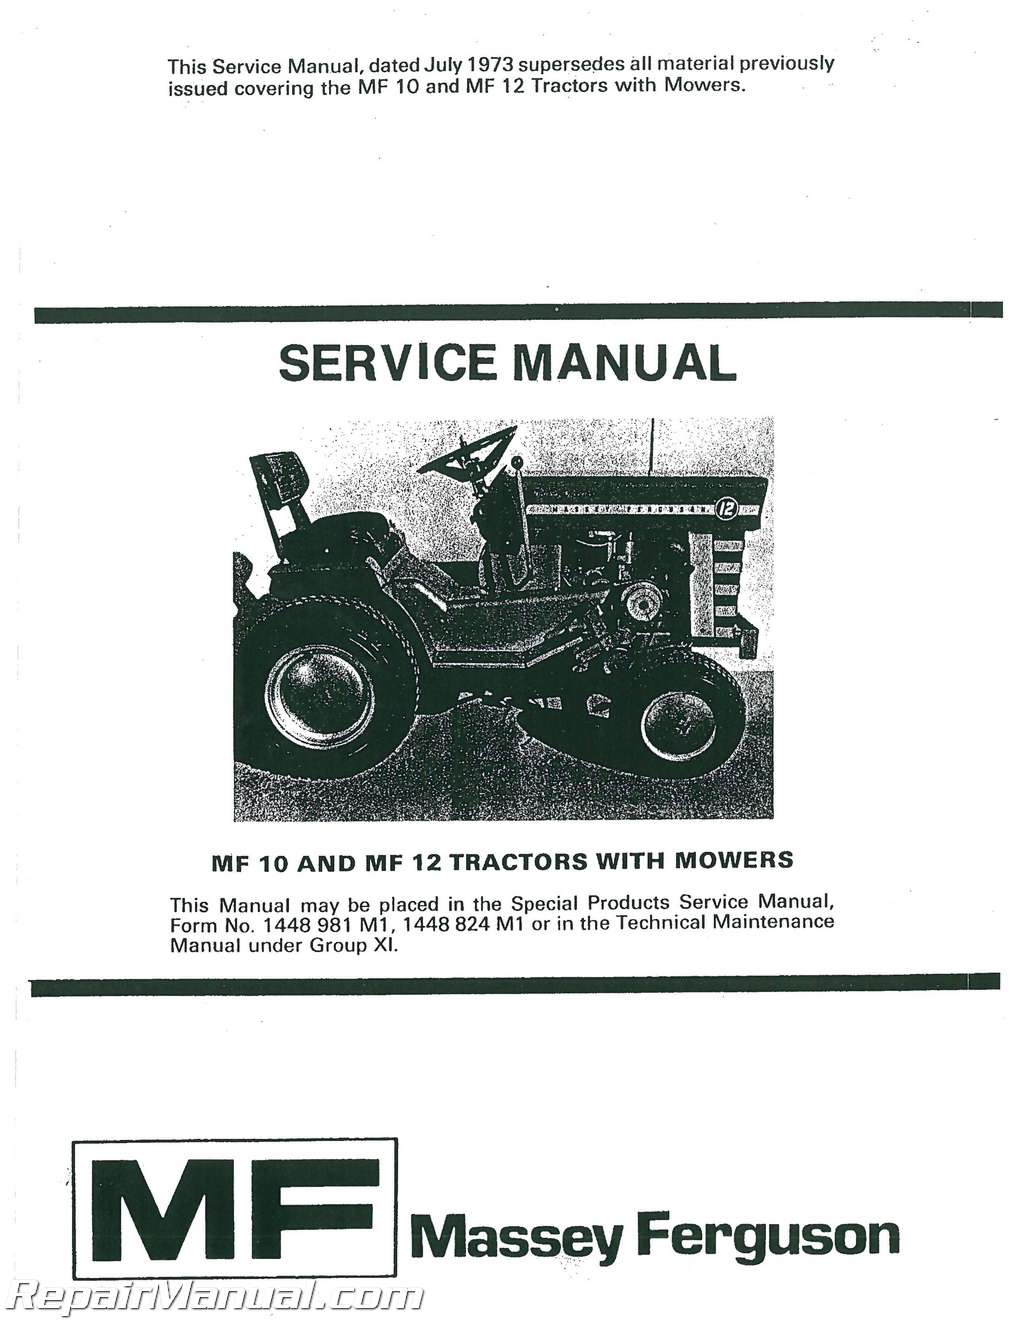 Service Manual Massey Ferguson 1210